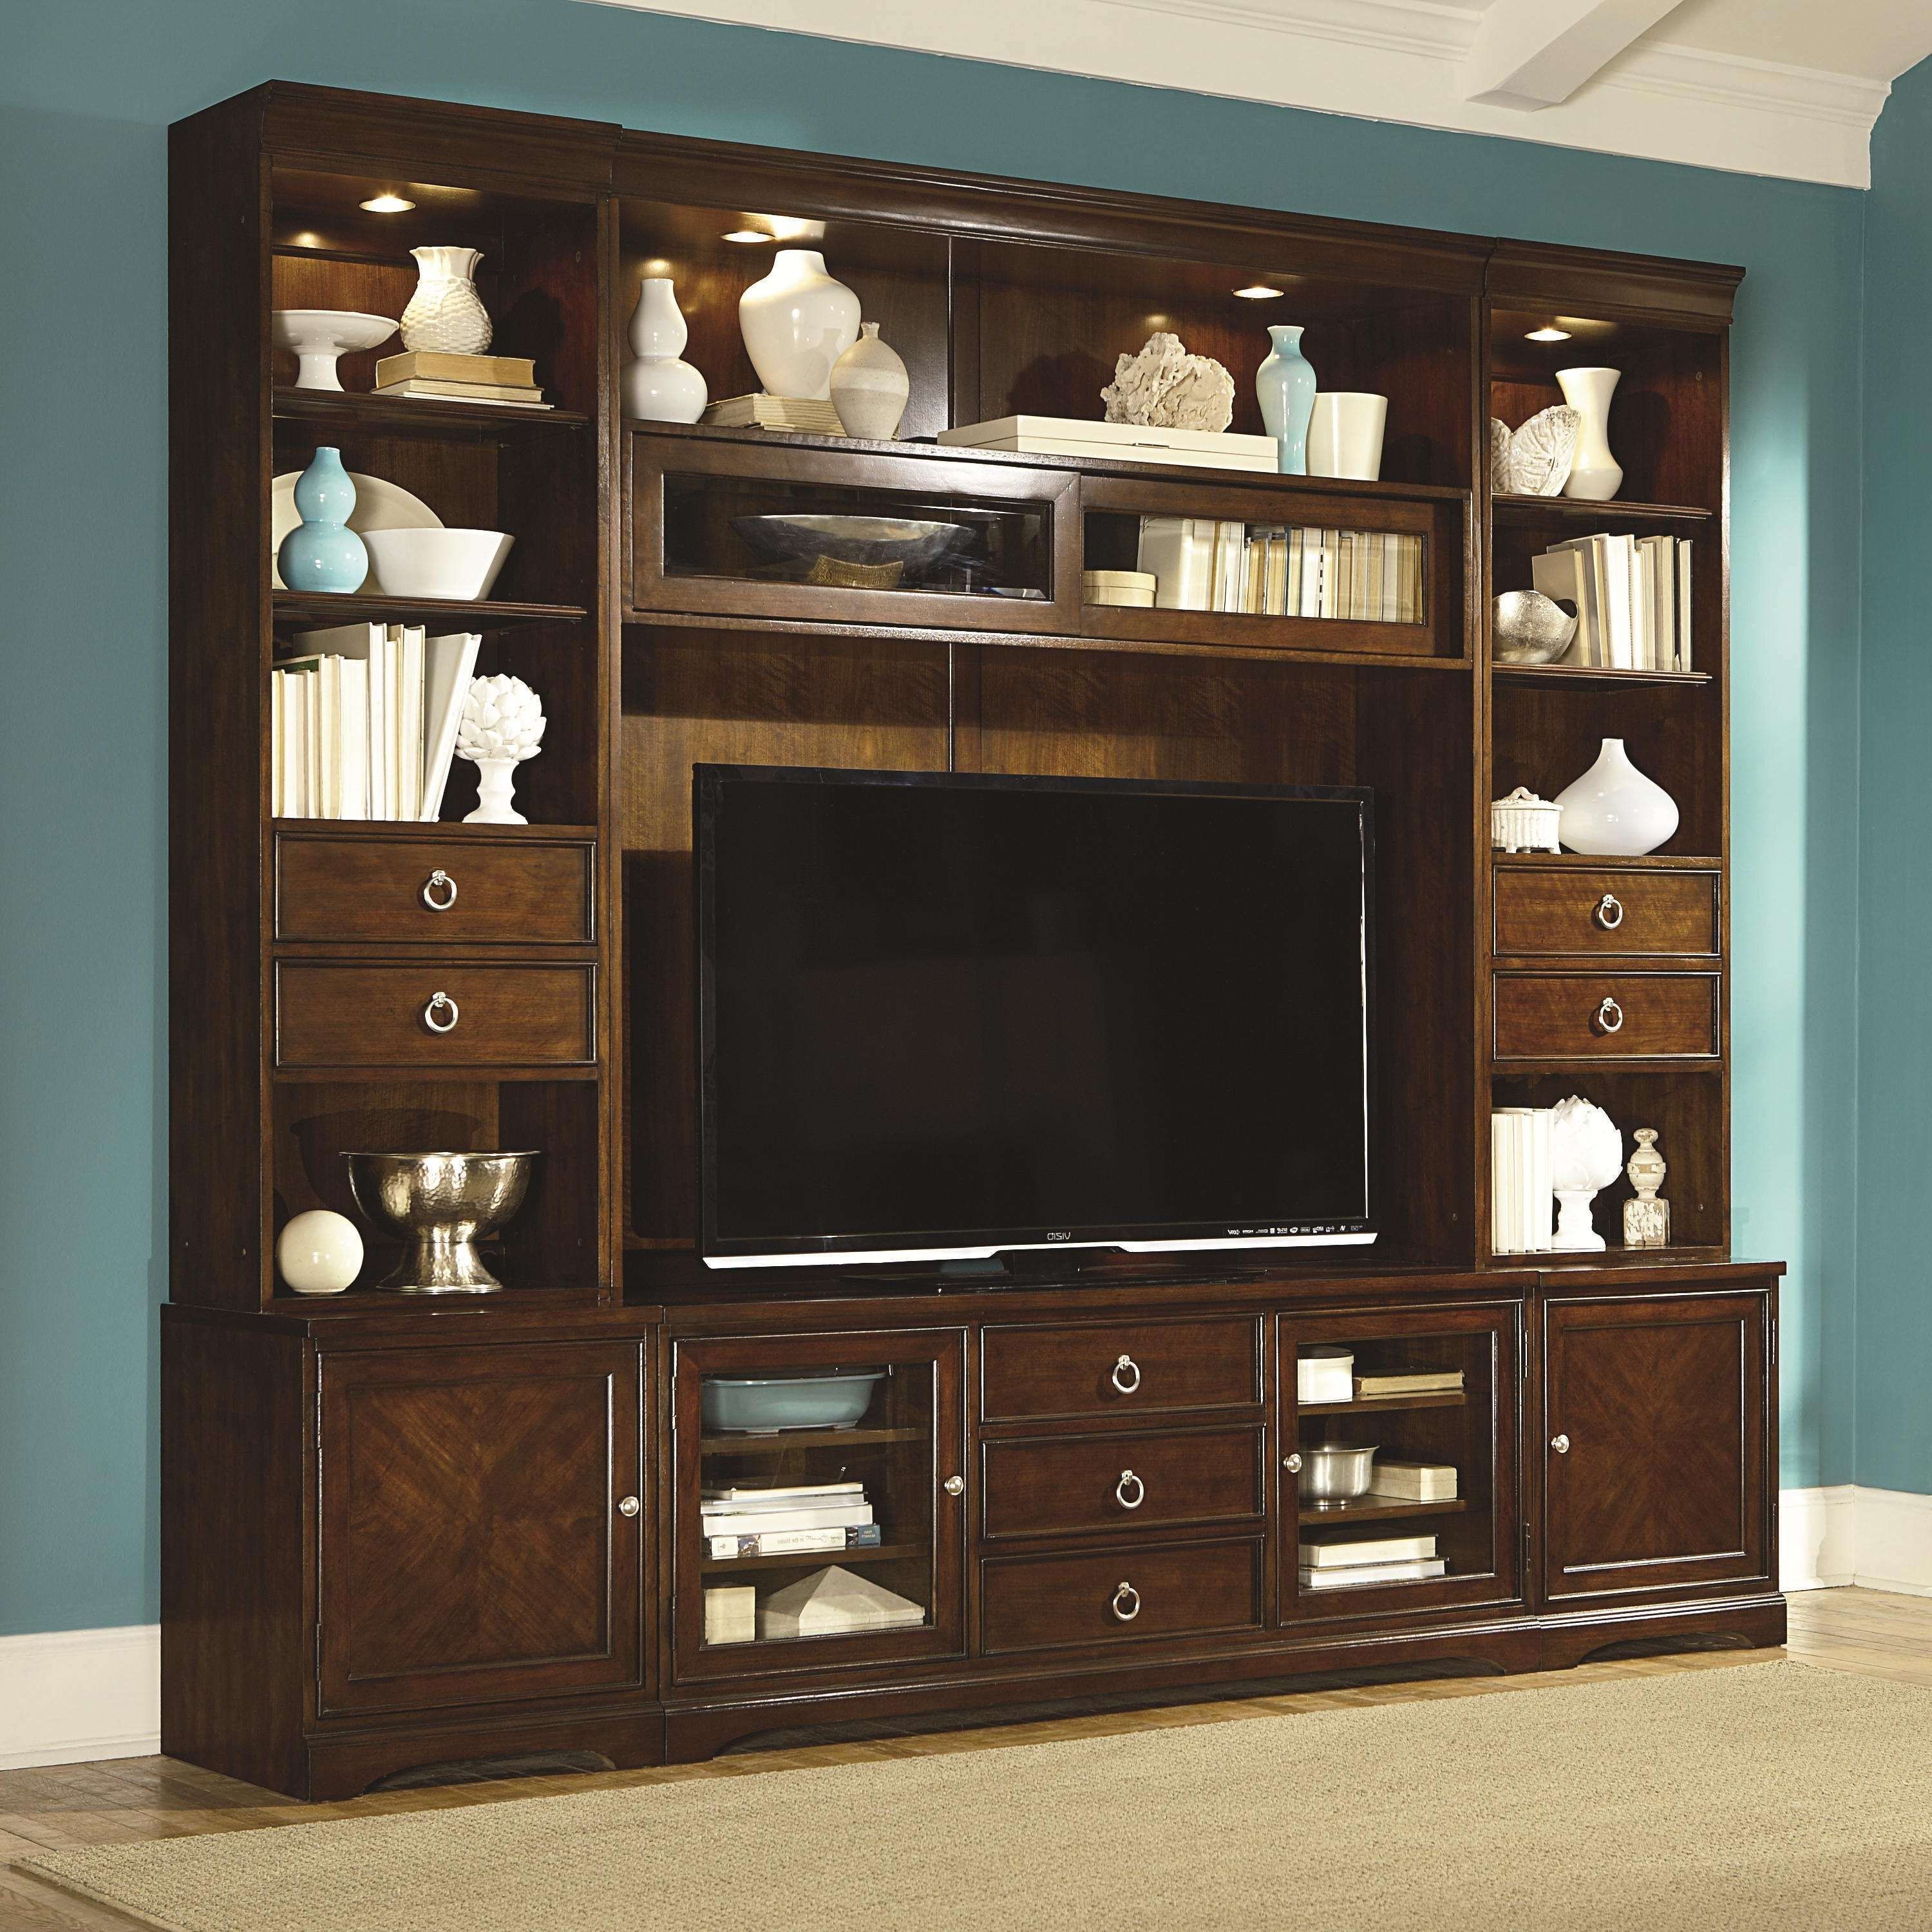 Creative Big Tv Cabinet Decoration Idea Luxury Amazing Simple In Regarding Big Tv Cabinets (View 10 of 20)